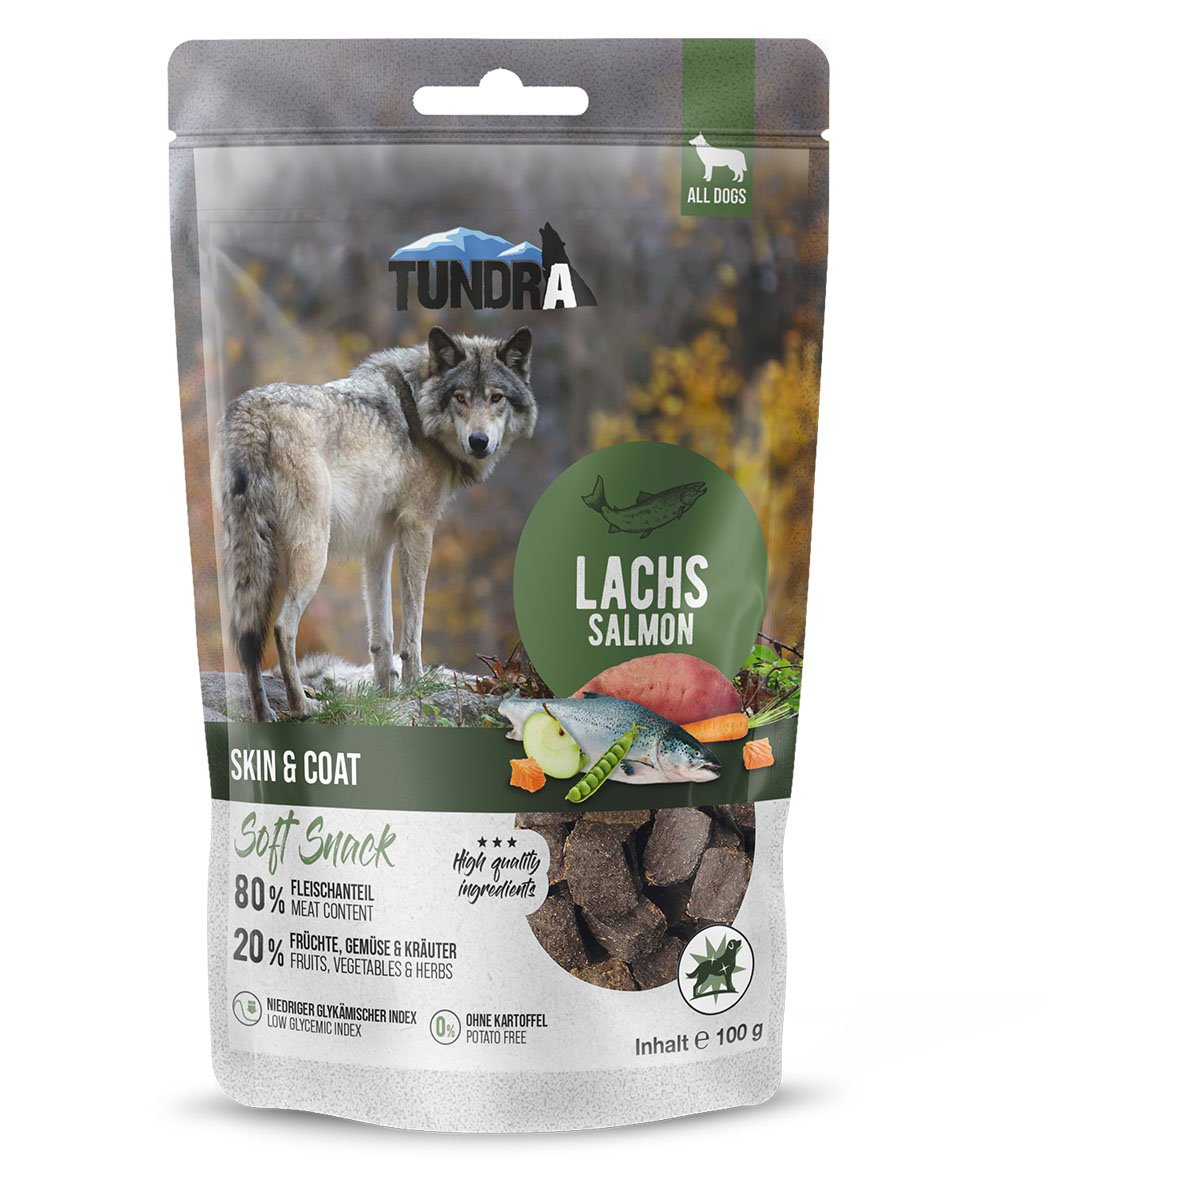 Tundra Dog Snack Skin & Coat Lachs 3x100g von Tundra